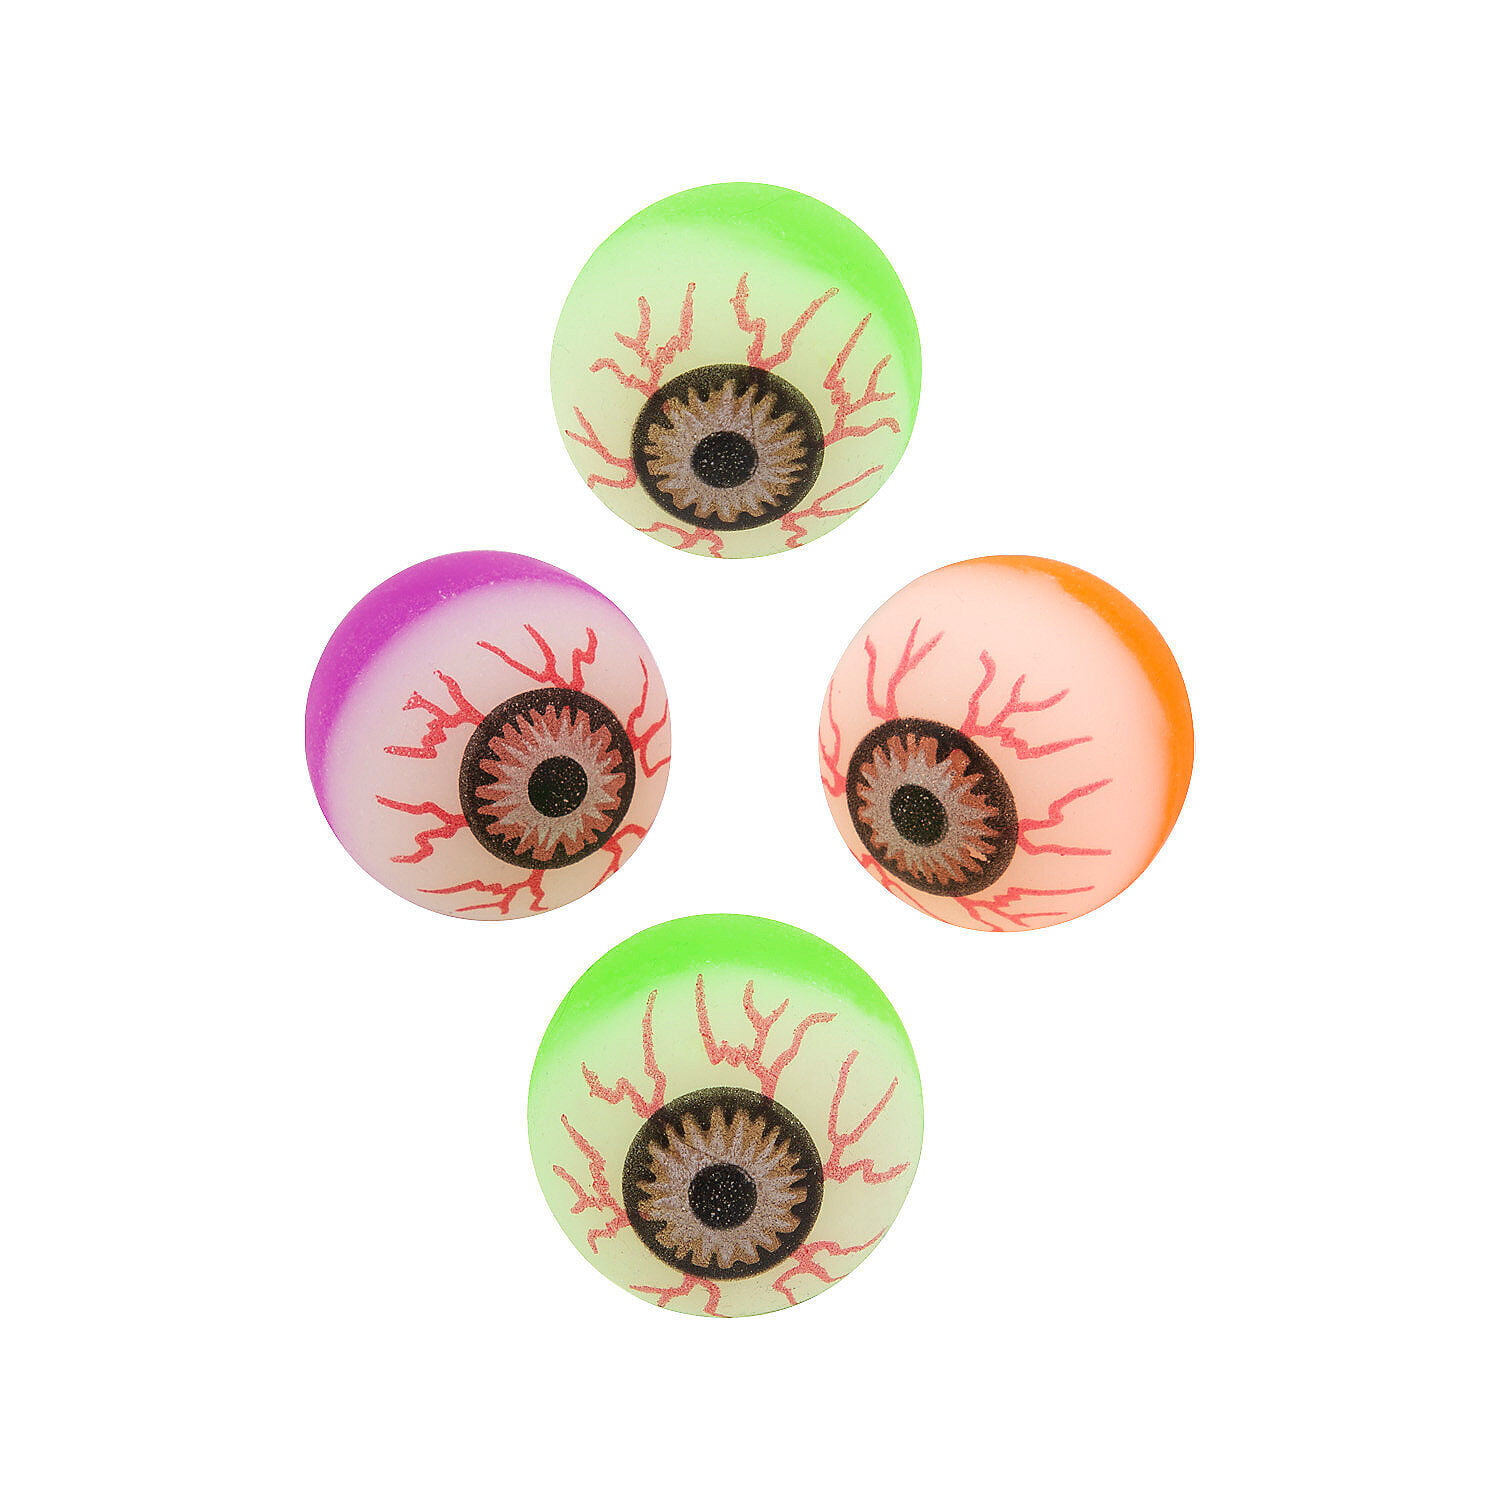 New Eyeball Bouncy Balls Assorted Colour Glowing Horror Bouncy Balls 6 Pack 